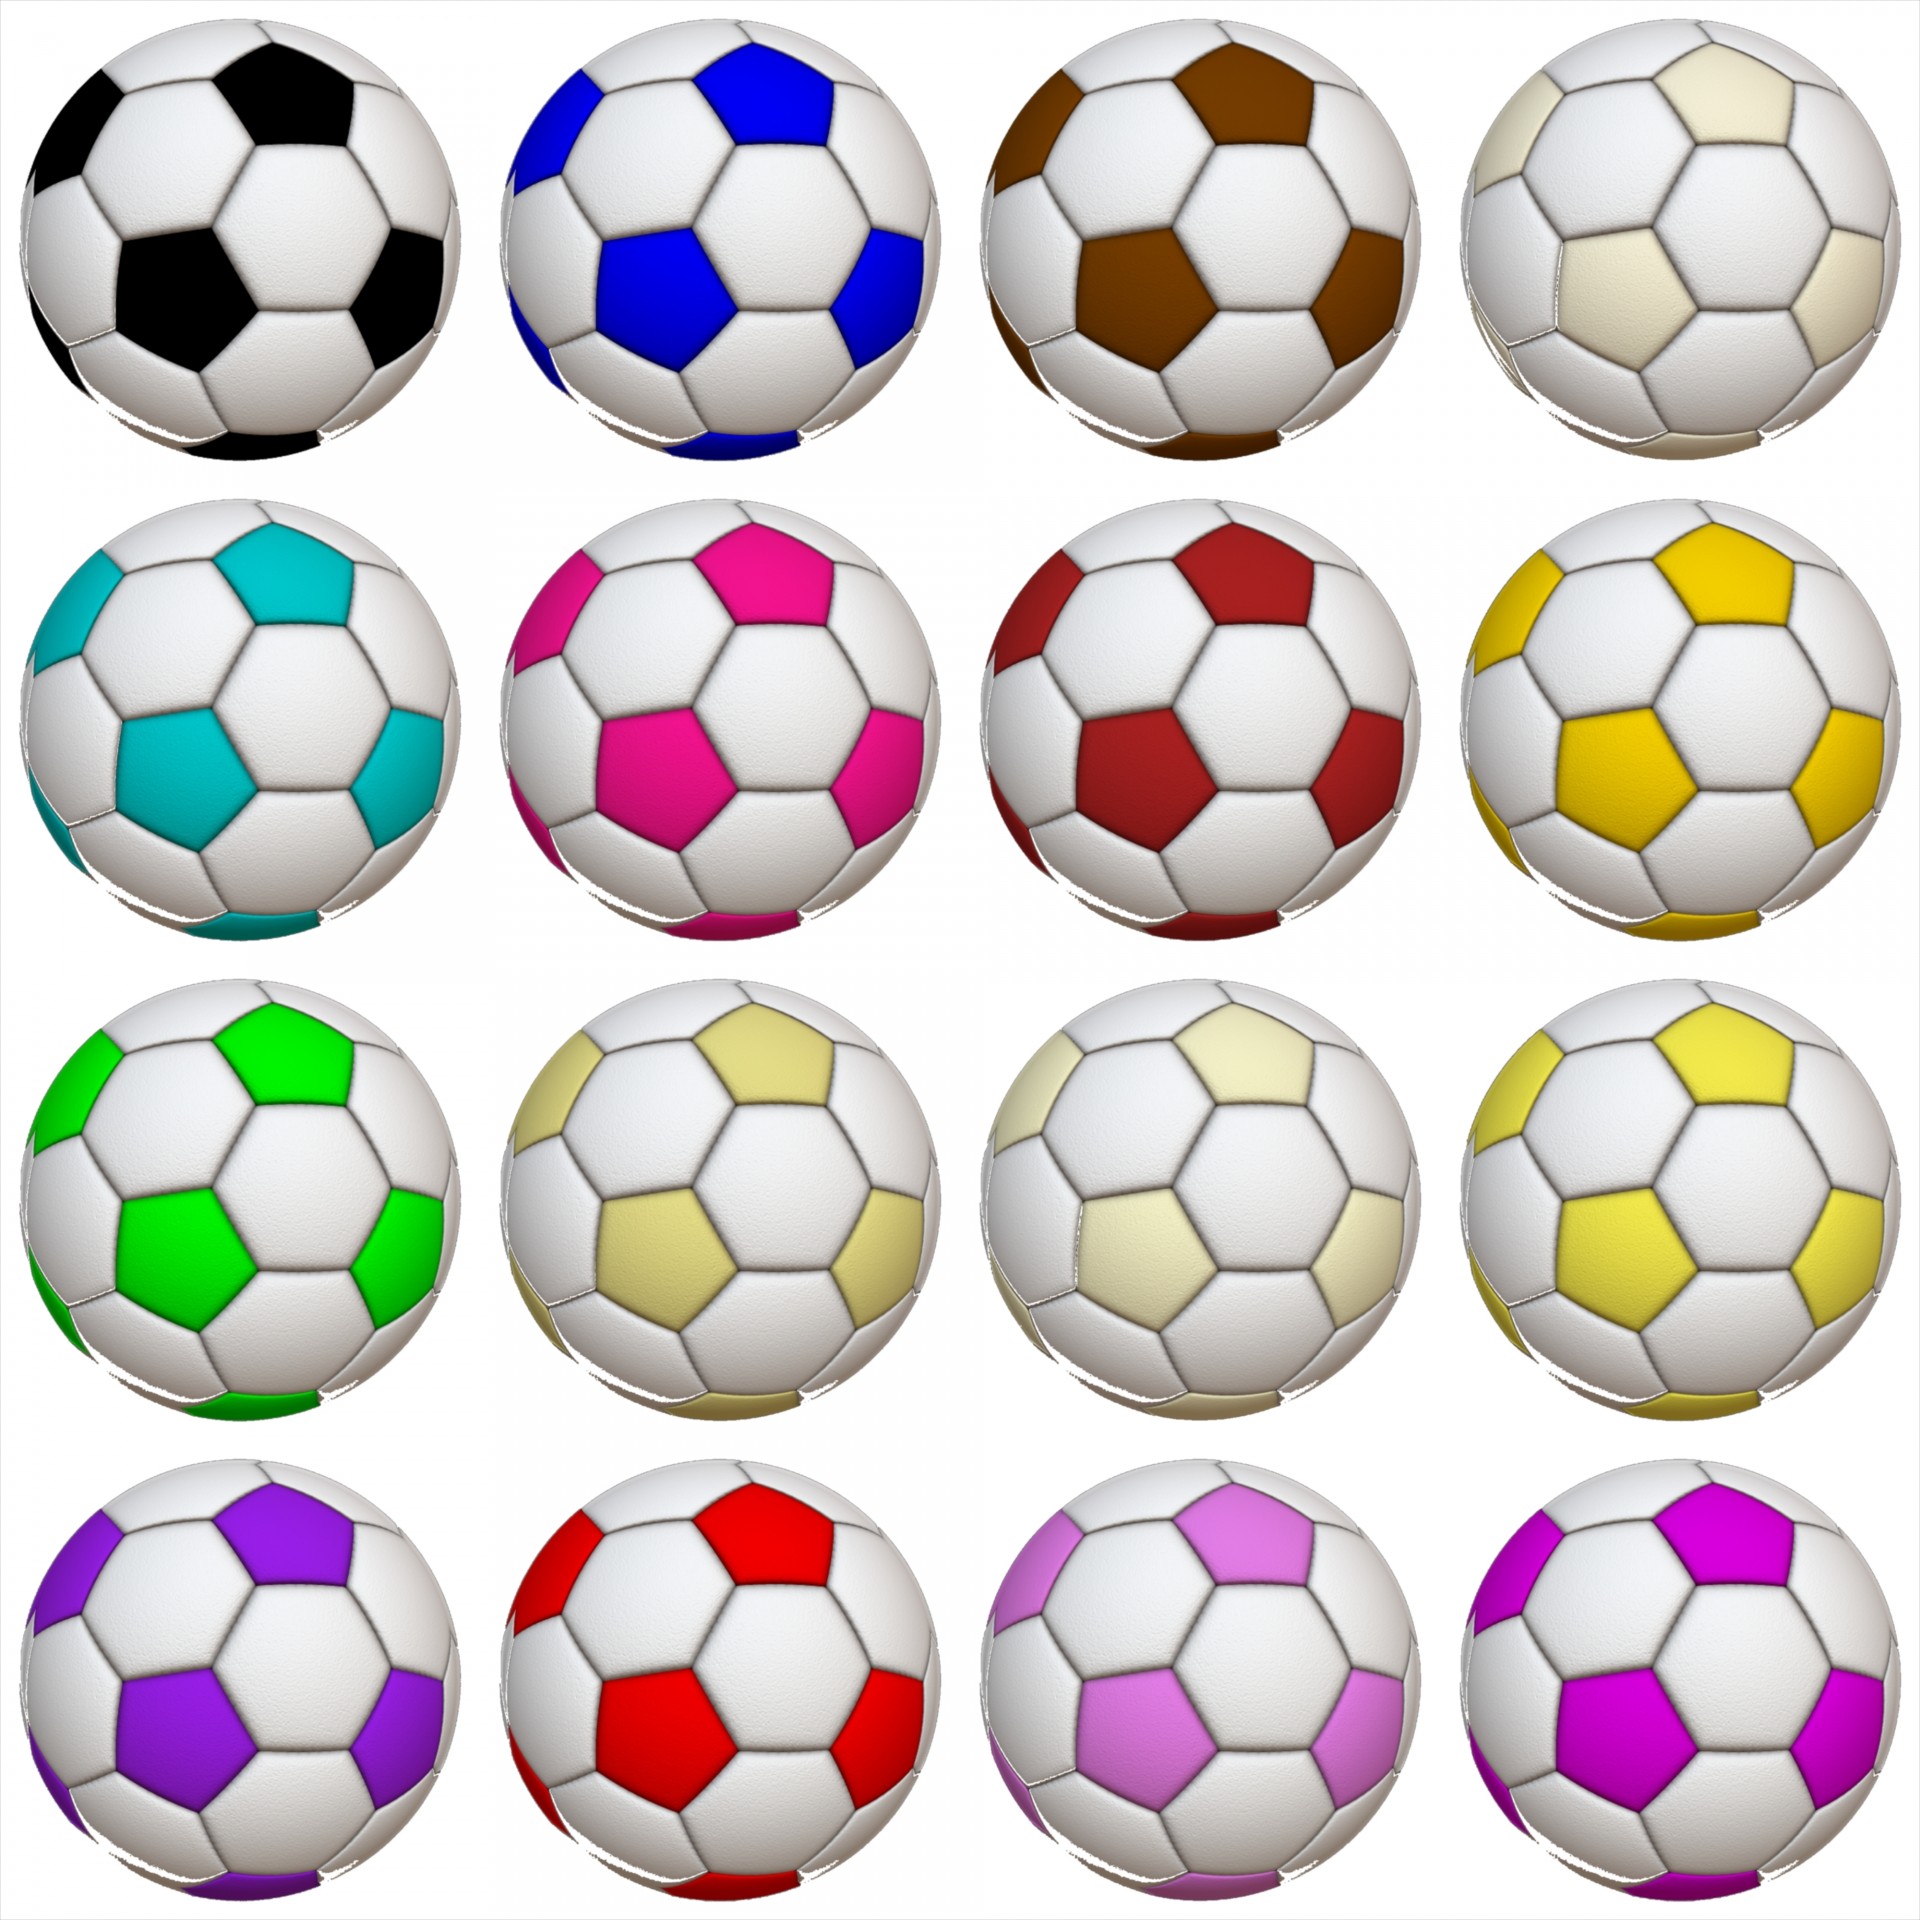 16 Soccer Balls